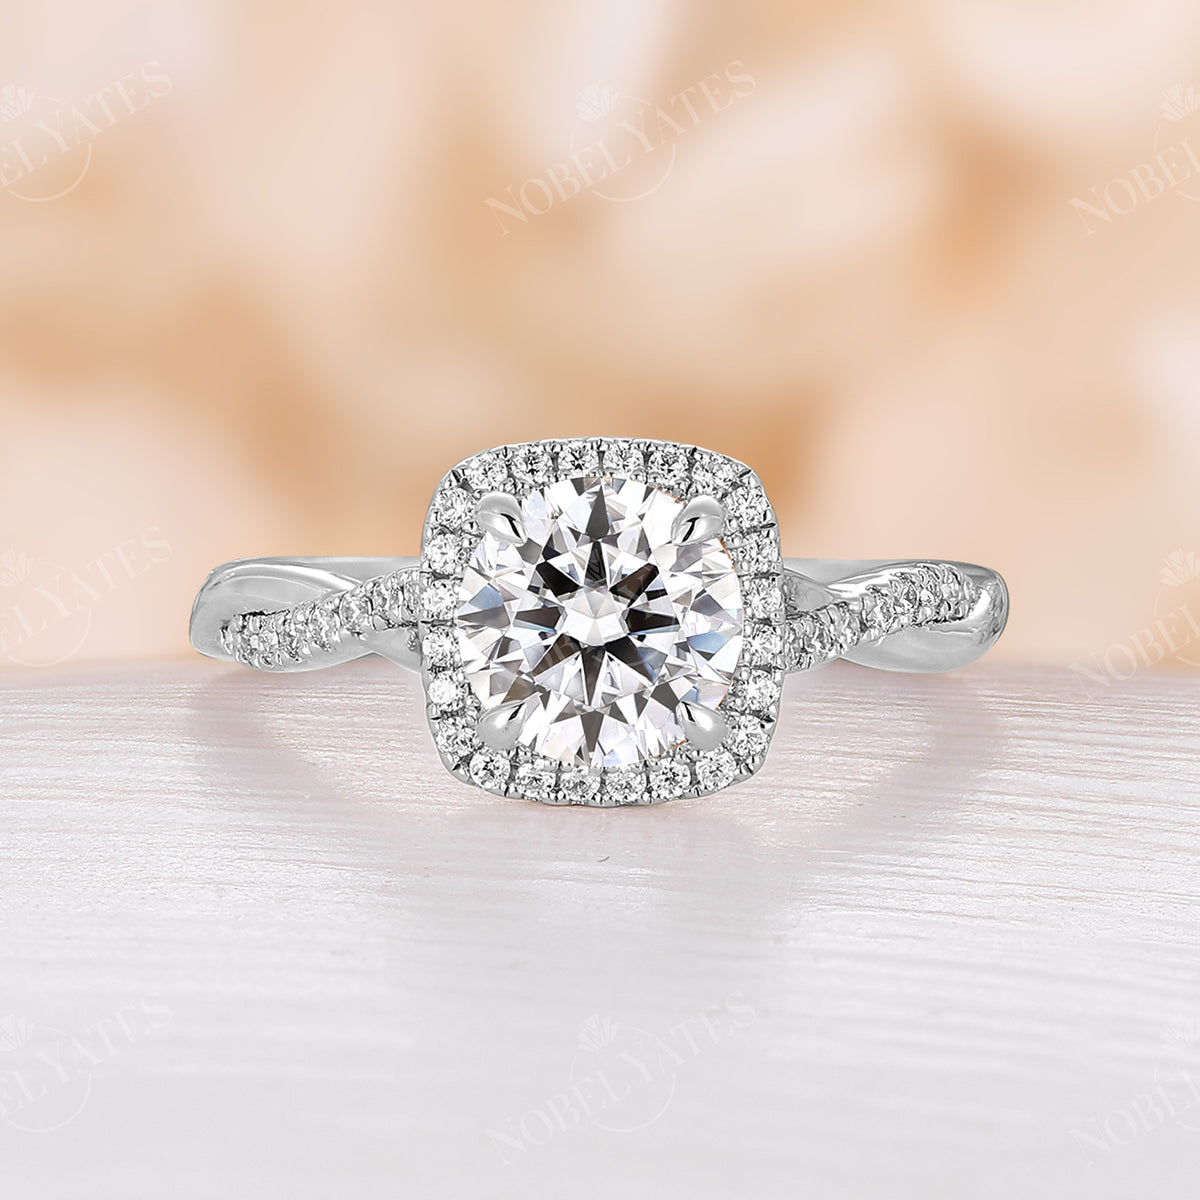 Vintage Round Moissanite Halo&Twist Engagement Ring Rose Gold